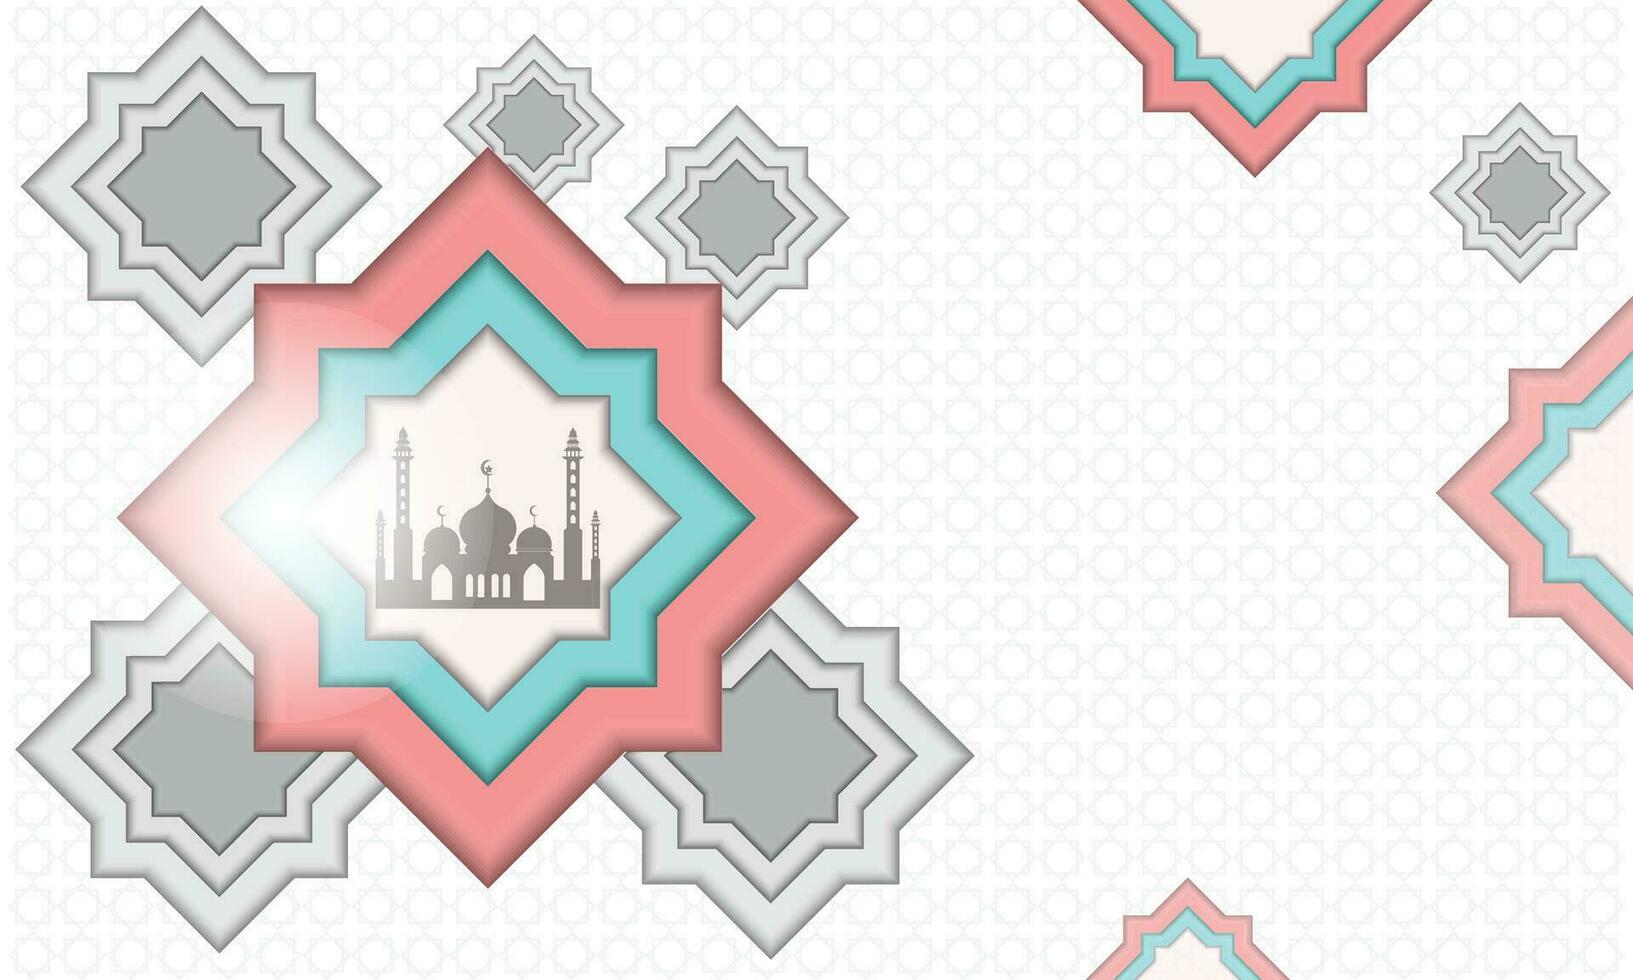 ramadan kareem achtergrond vector